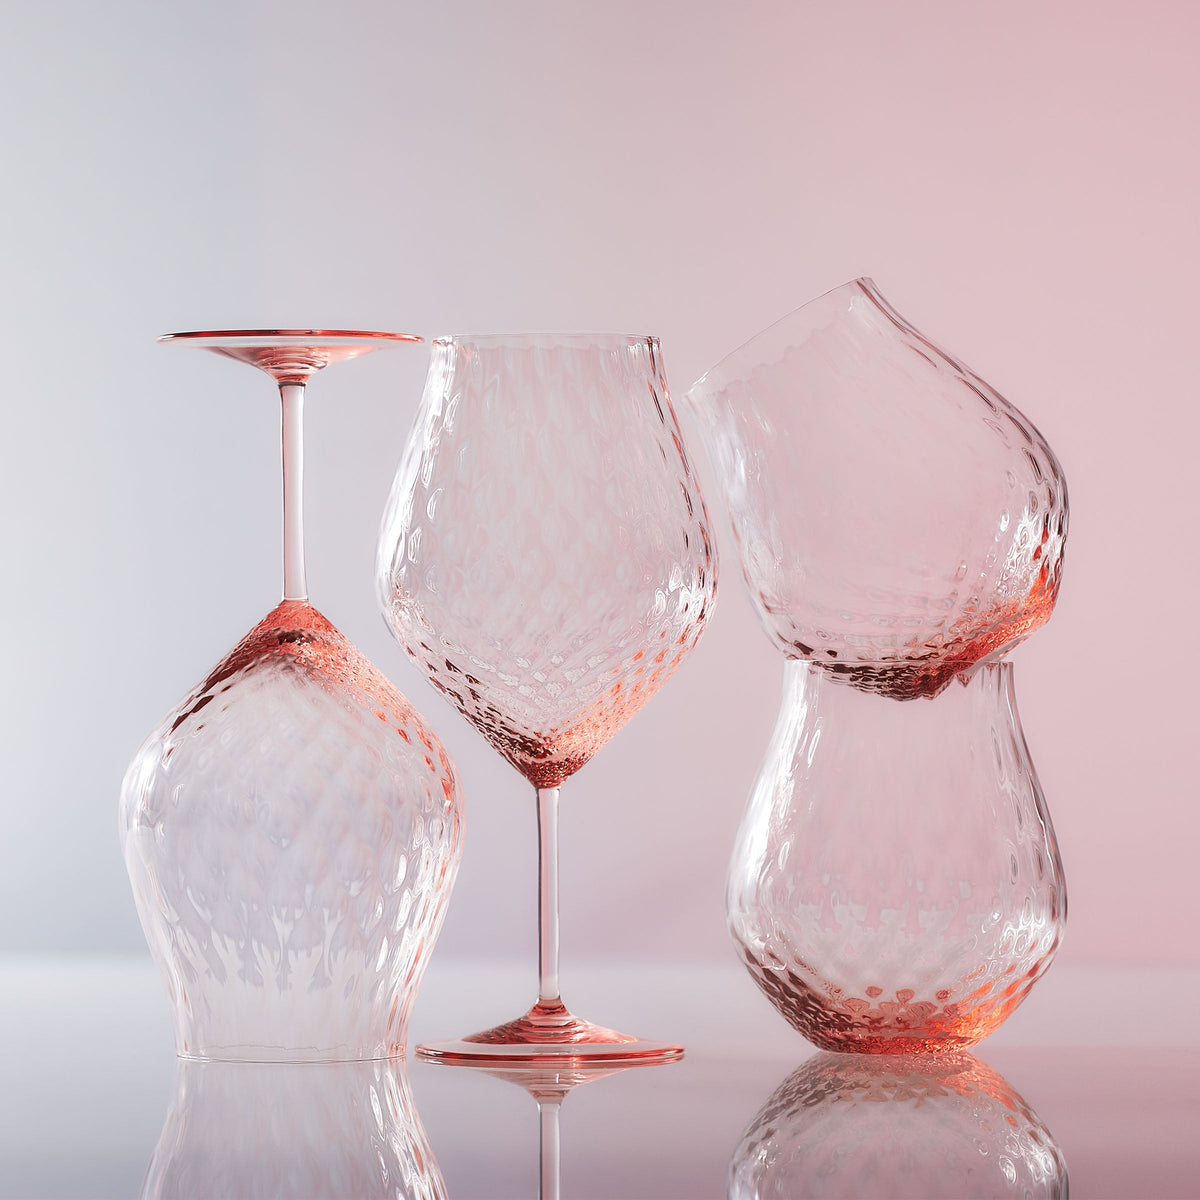 Phoebe rose pink crystal stemless tulip wine glasses from Caskata.